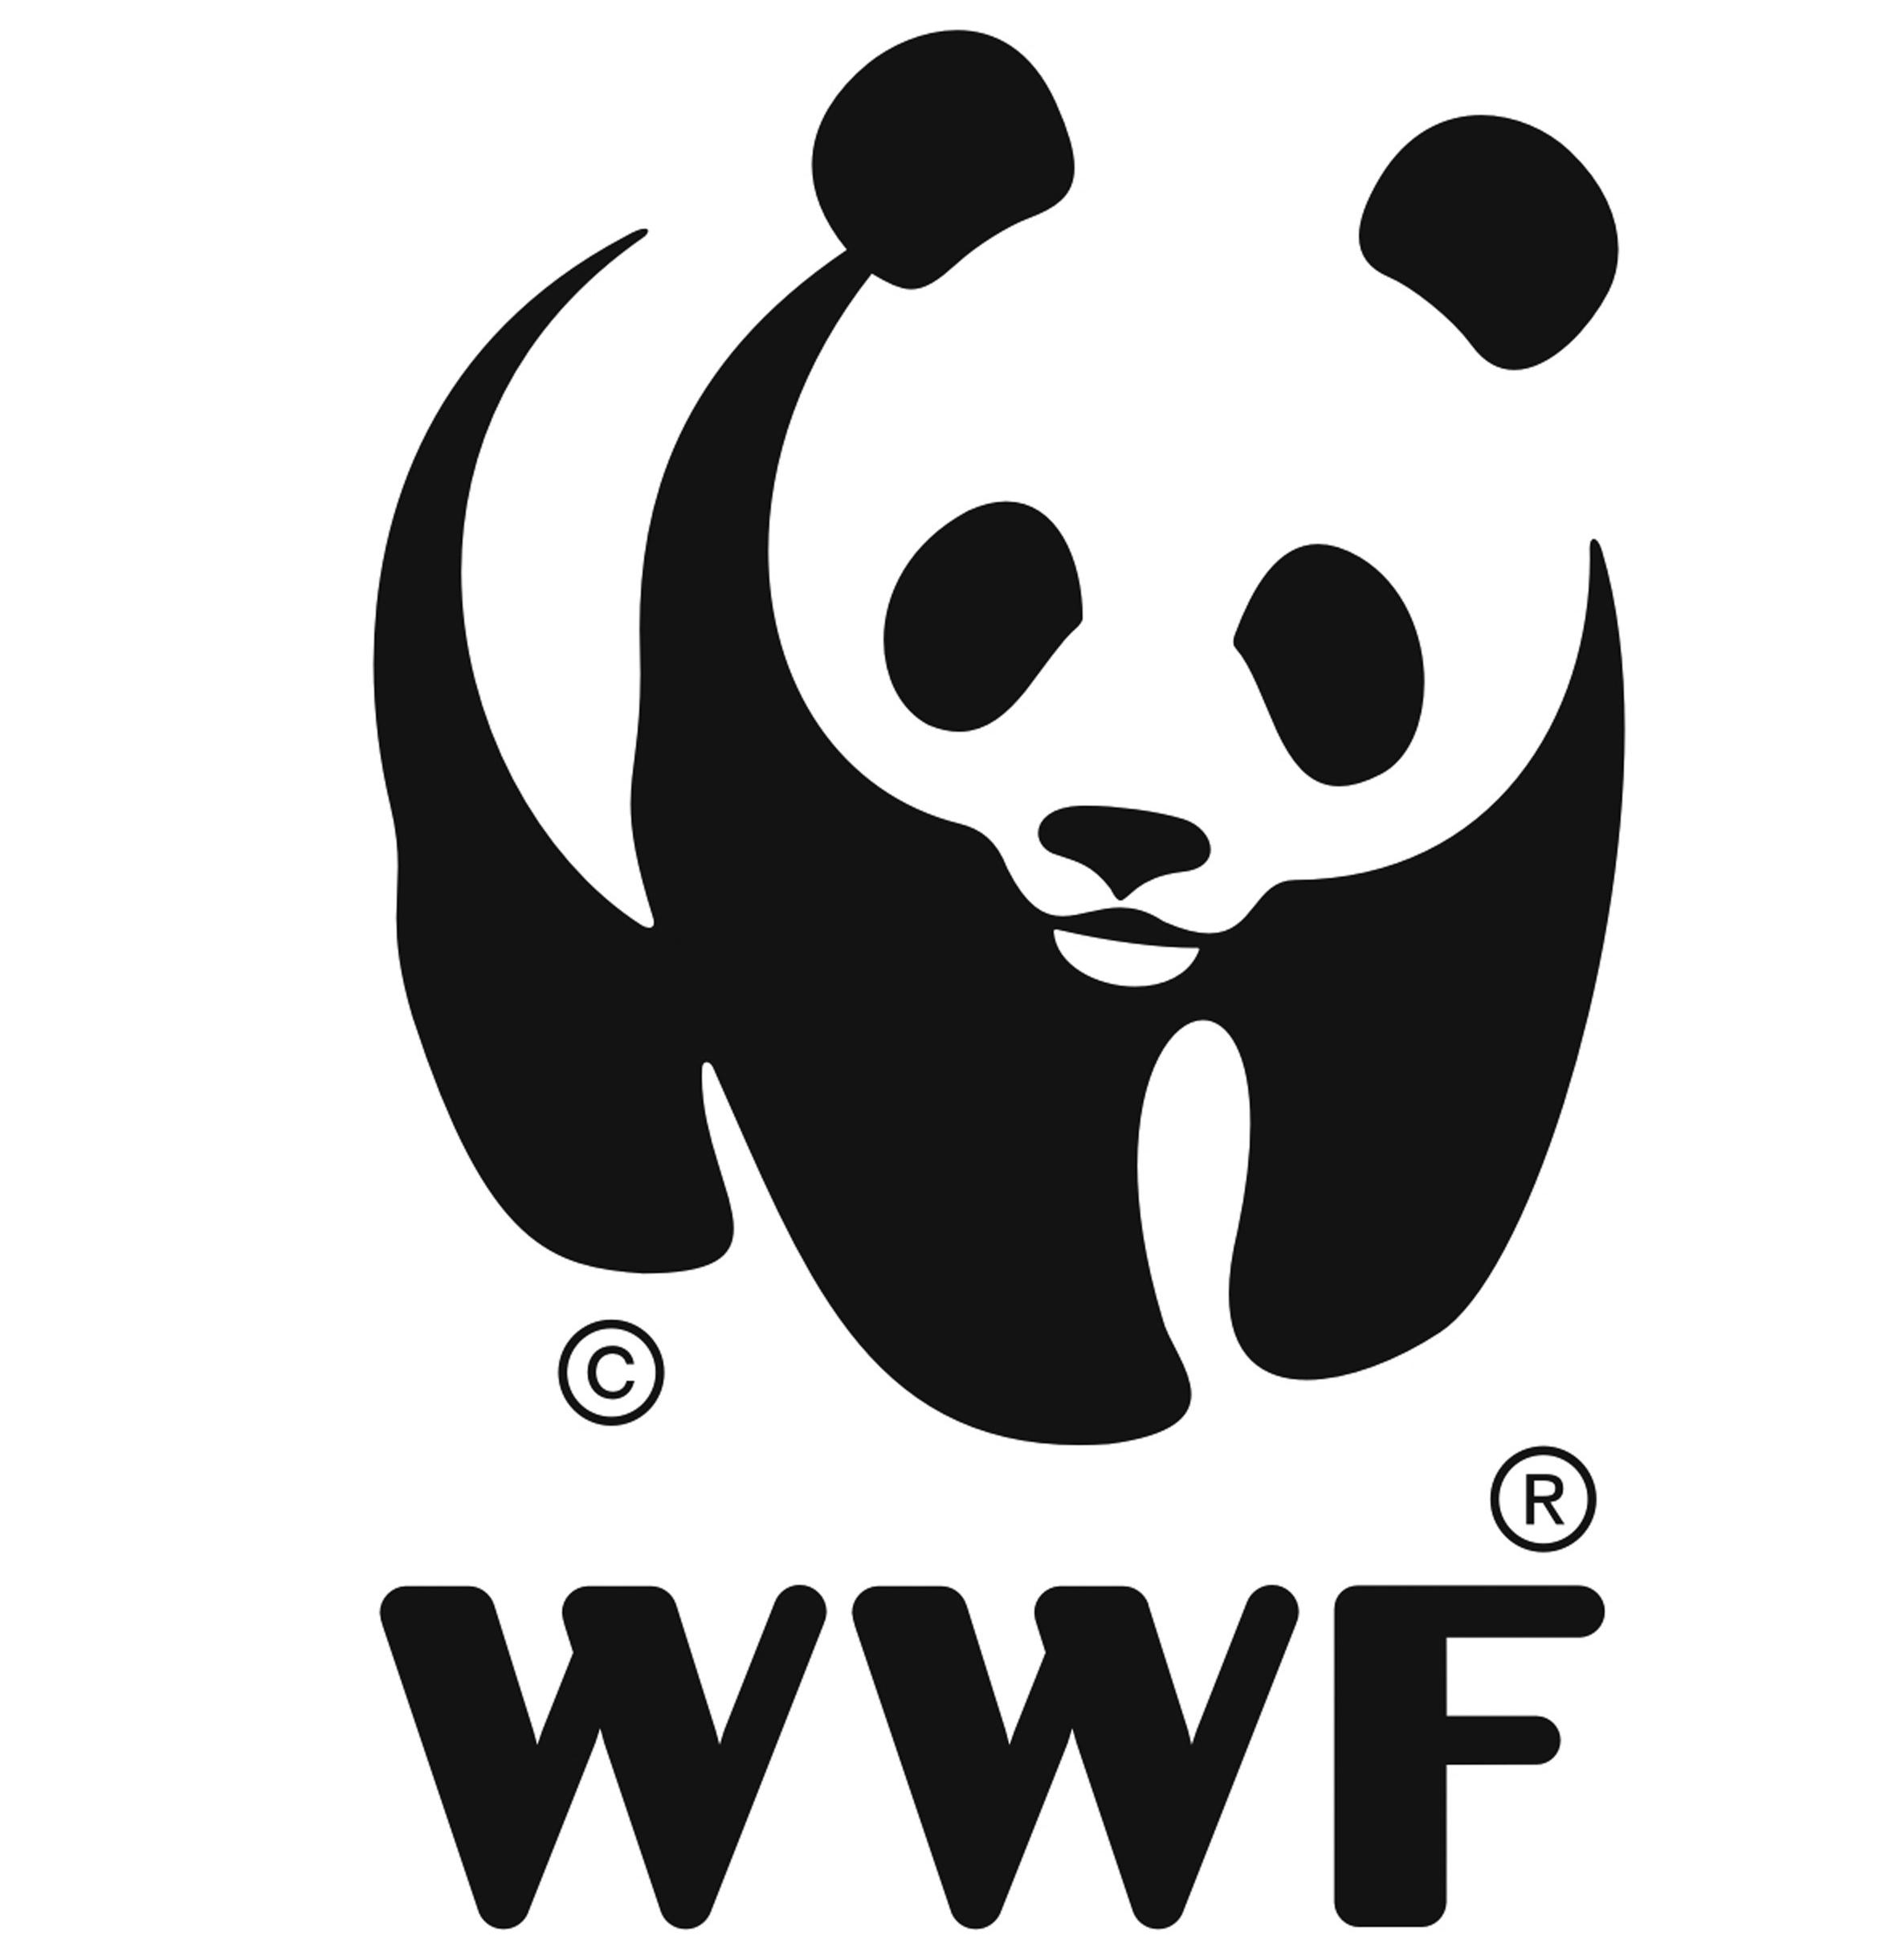 World Wildlife Fund (WWF)